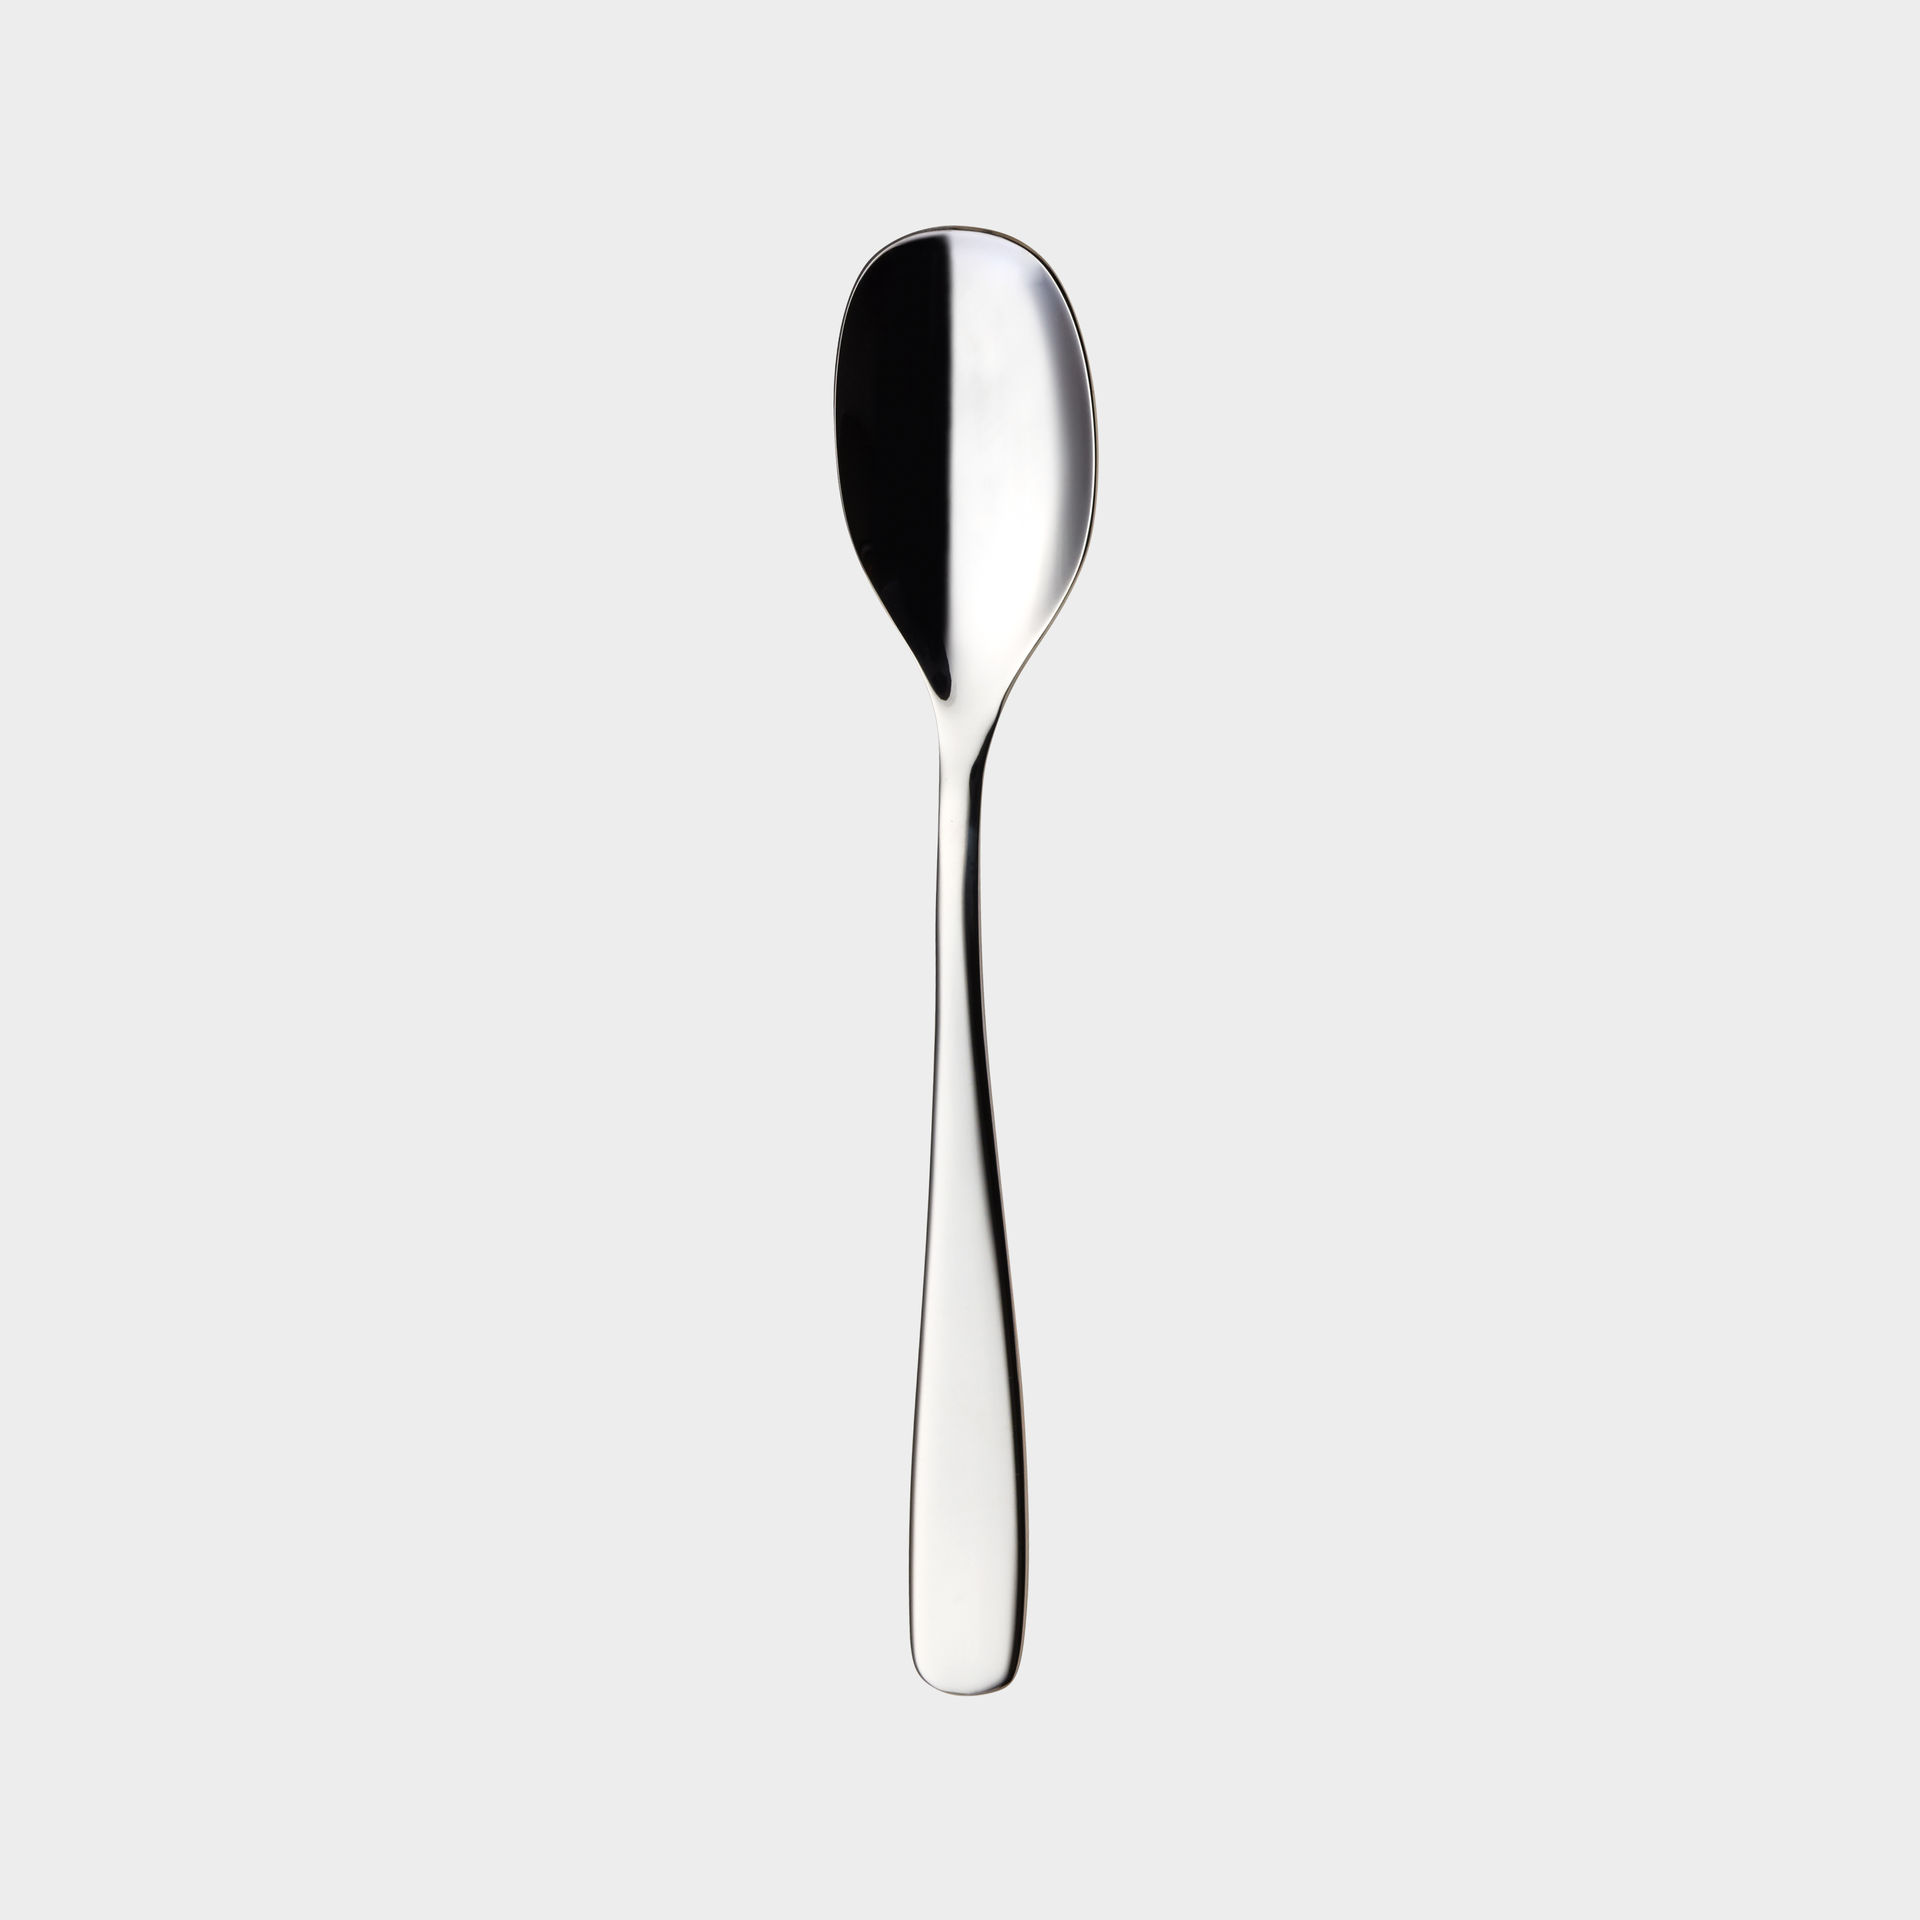 Tuva dessert spoon product image